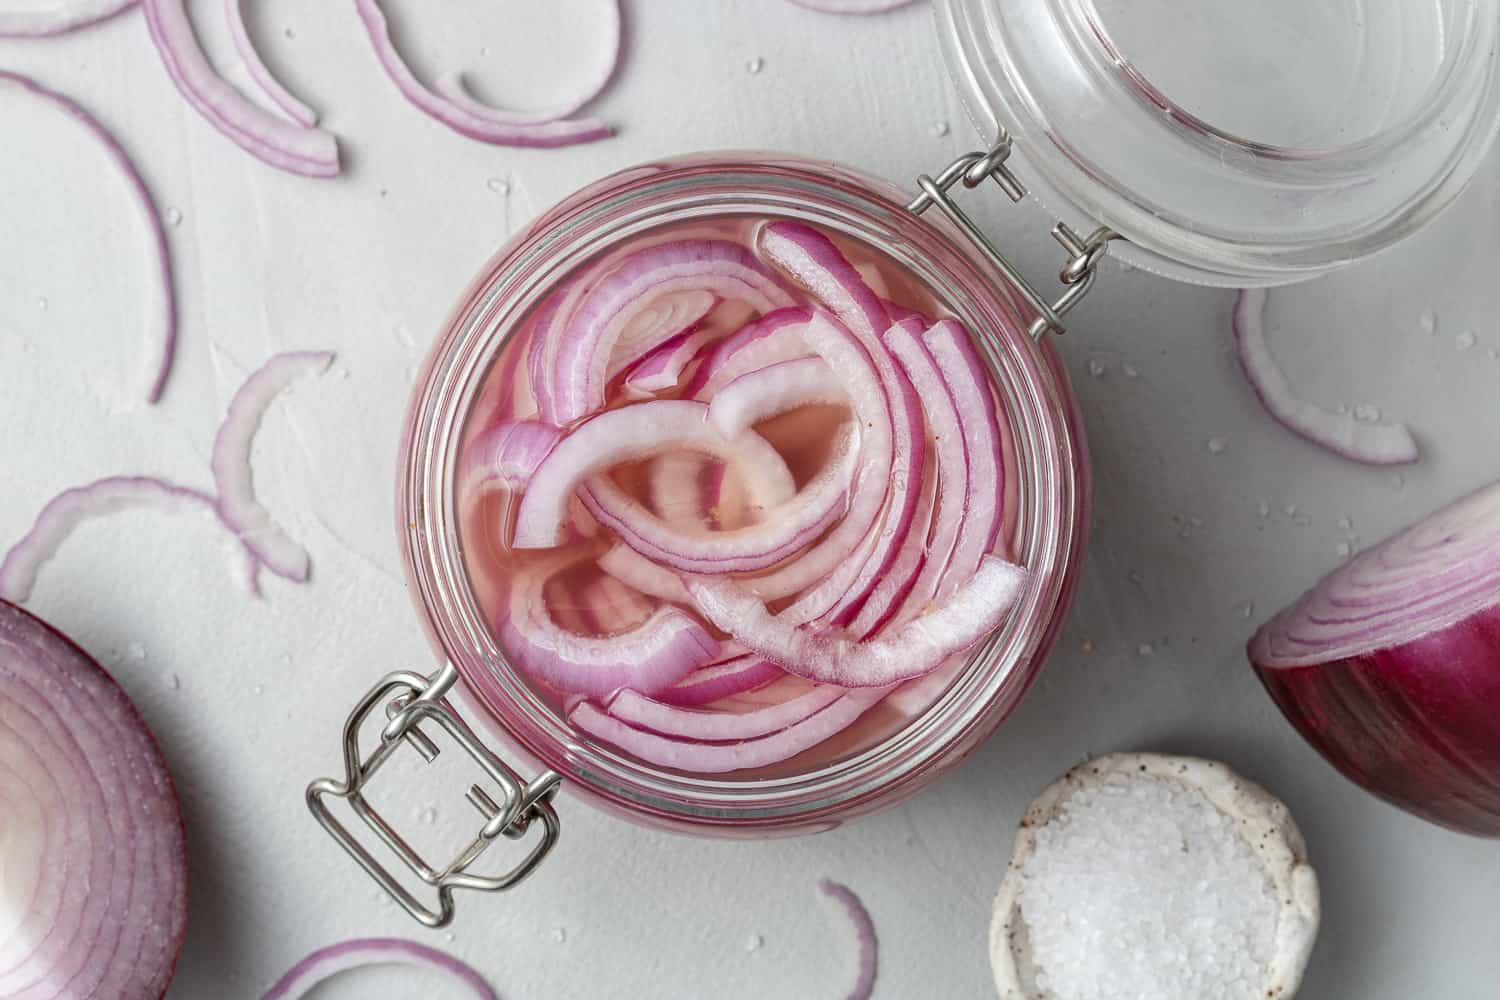 Sliced onions in pickling brine.